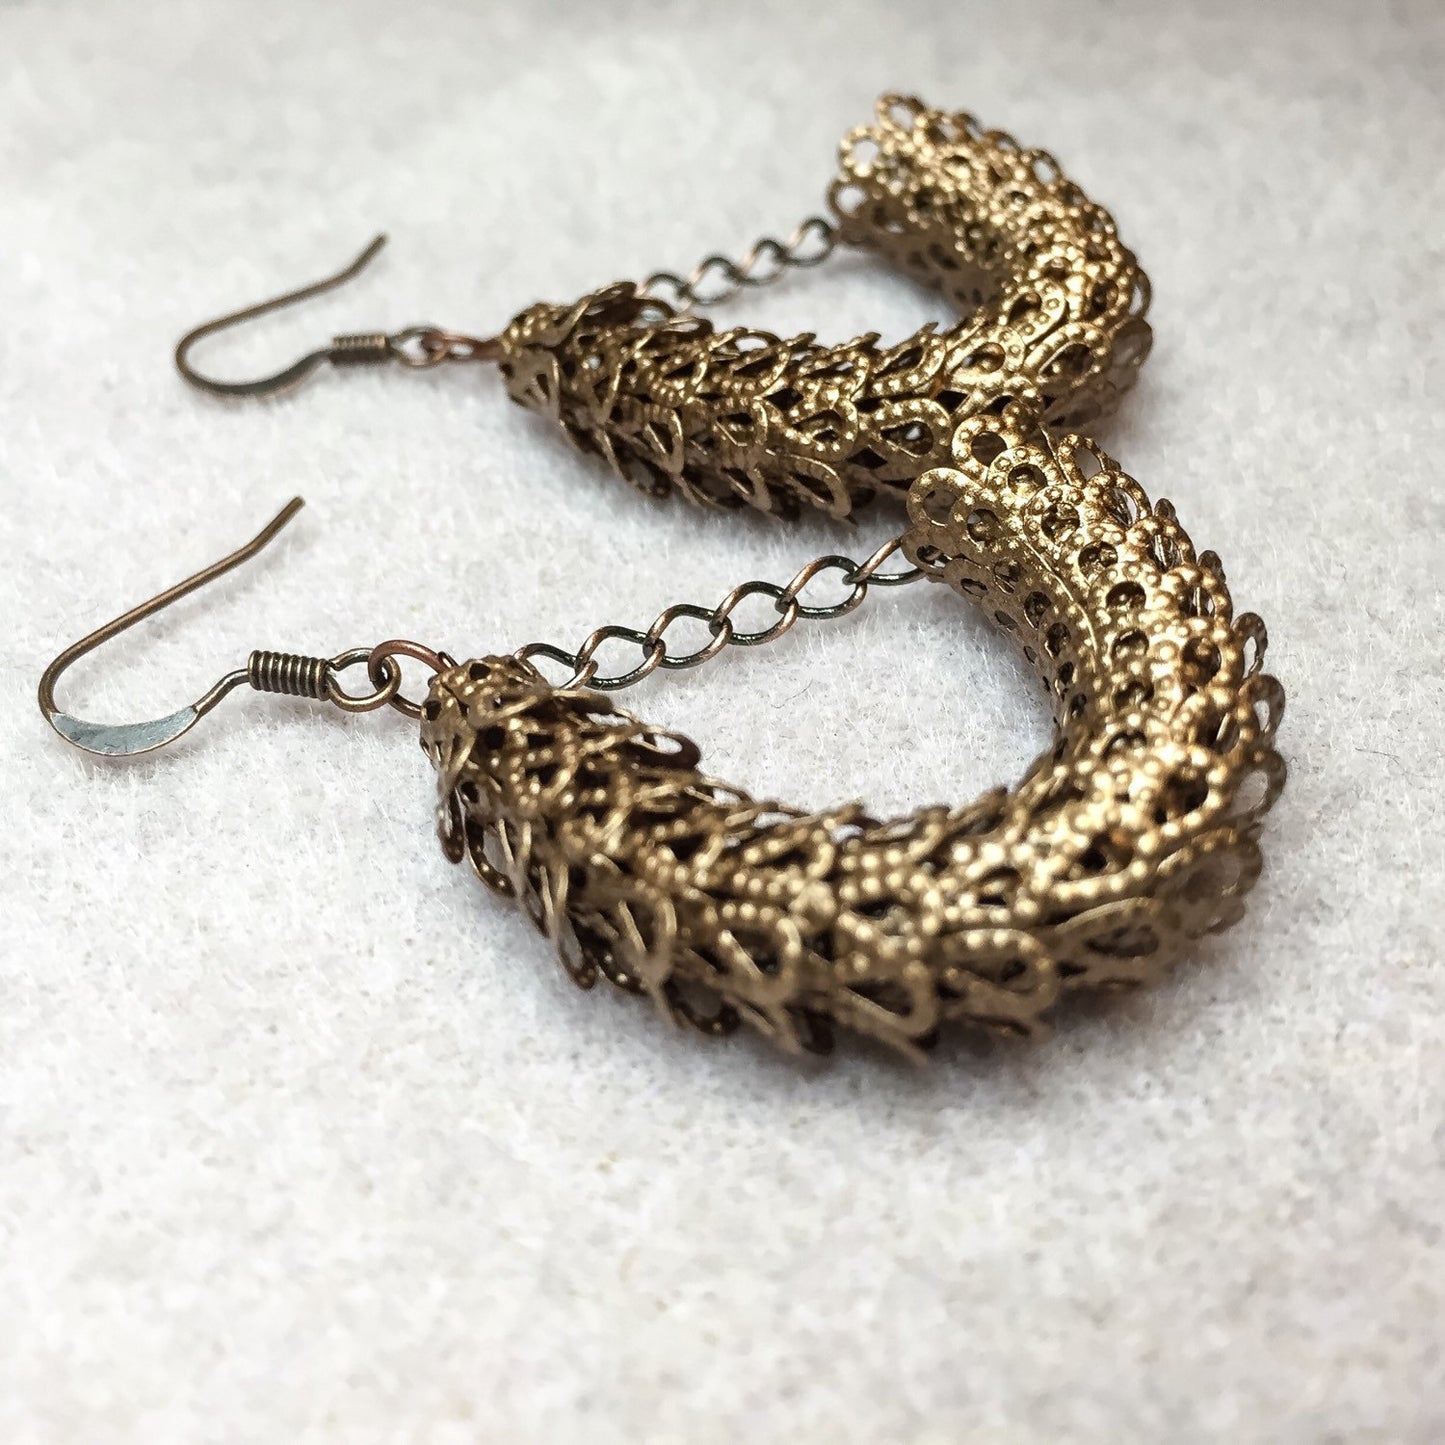 Lacy Dragon Scale Earrings in Antique Copper